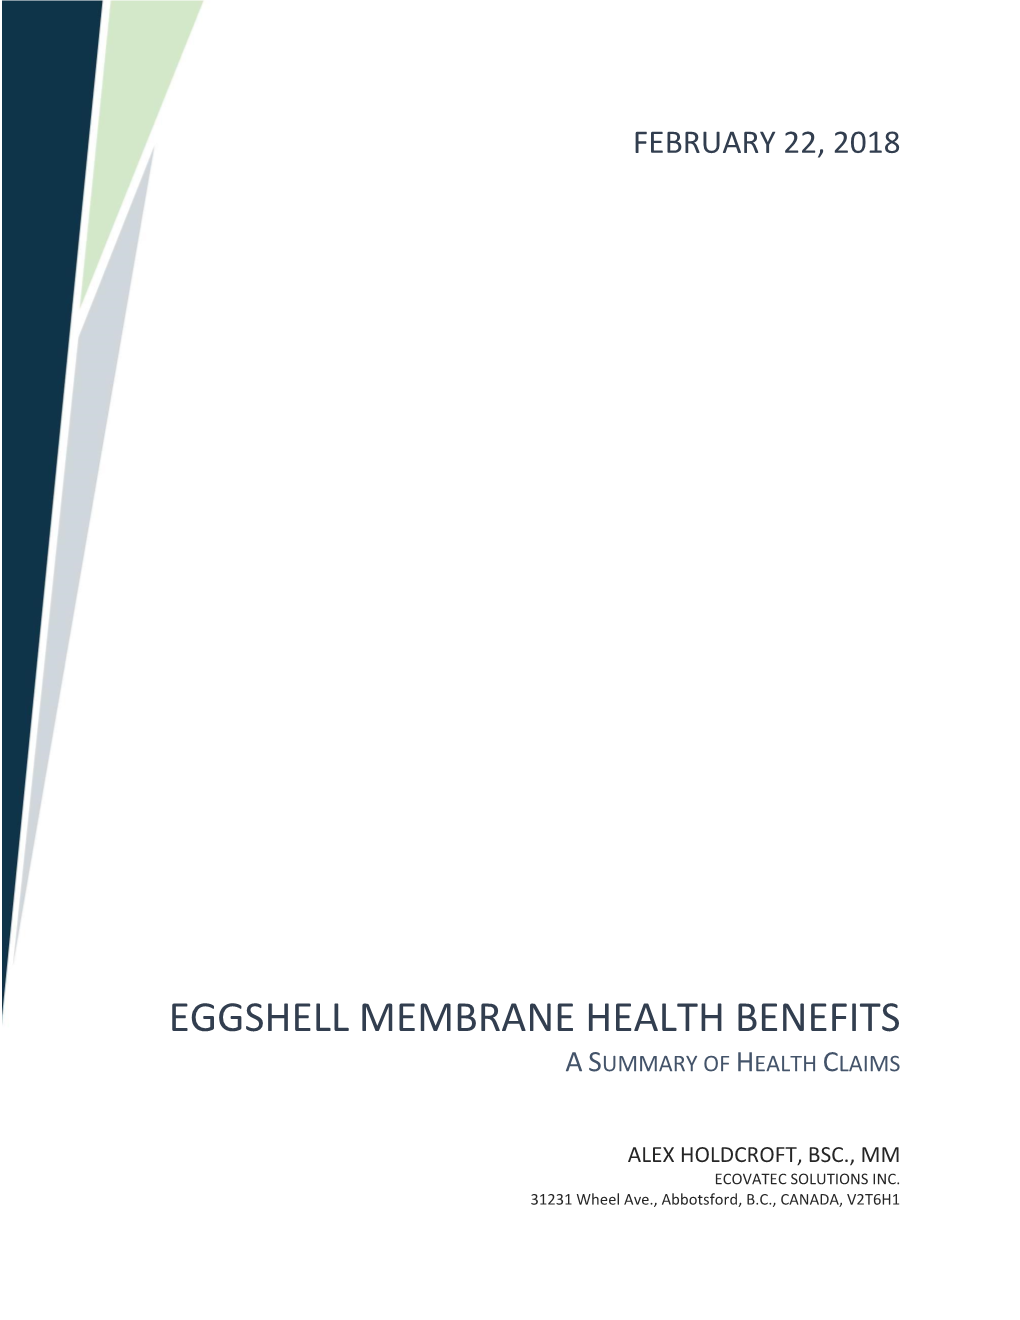 Eggshell Membrane Health Benefits a Summary of Health Claims